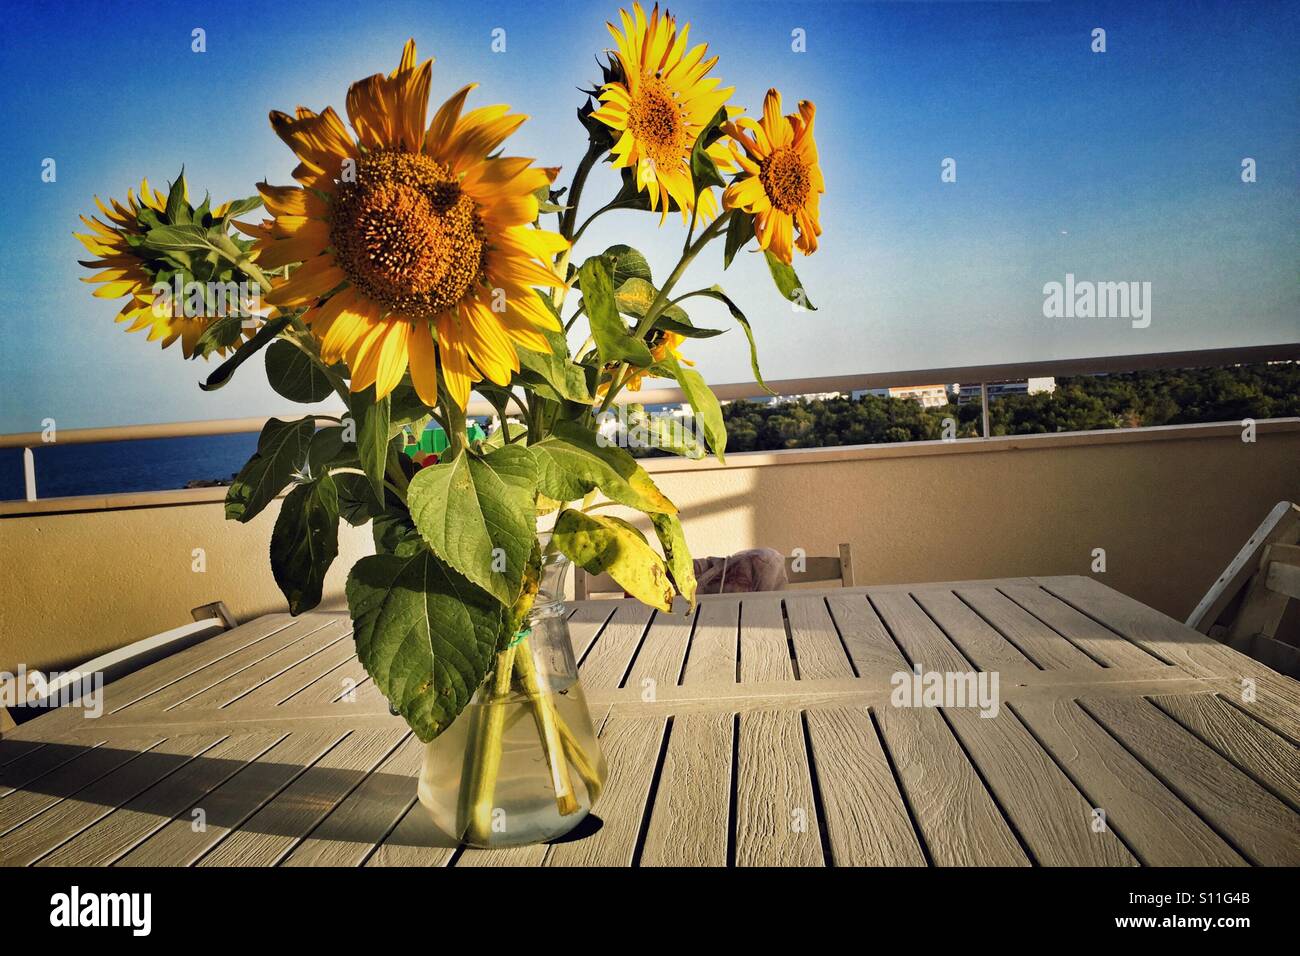 Sunflowers on the balcony Stock Photo